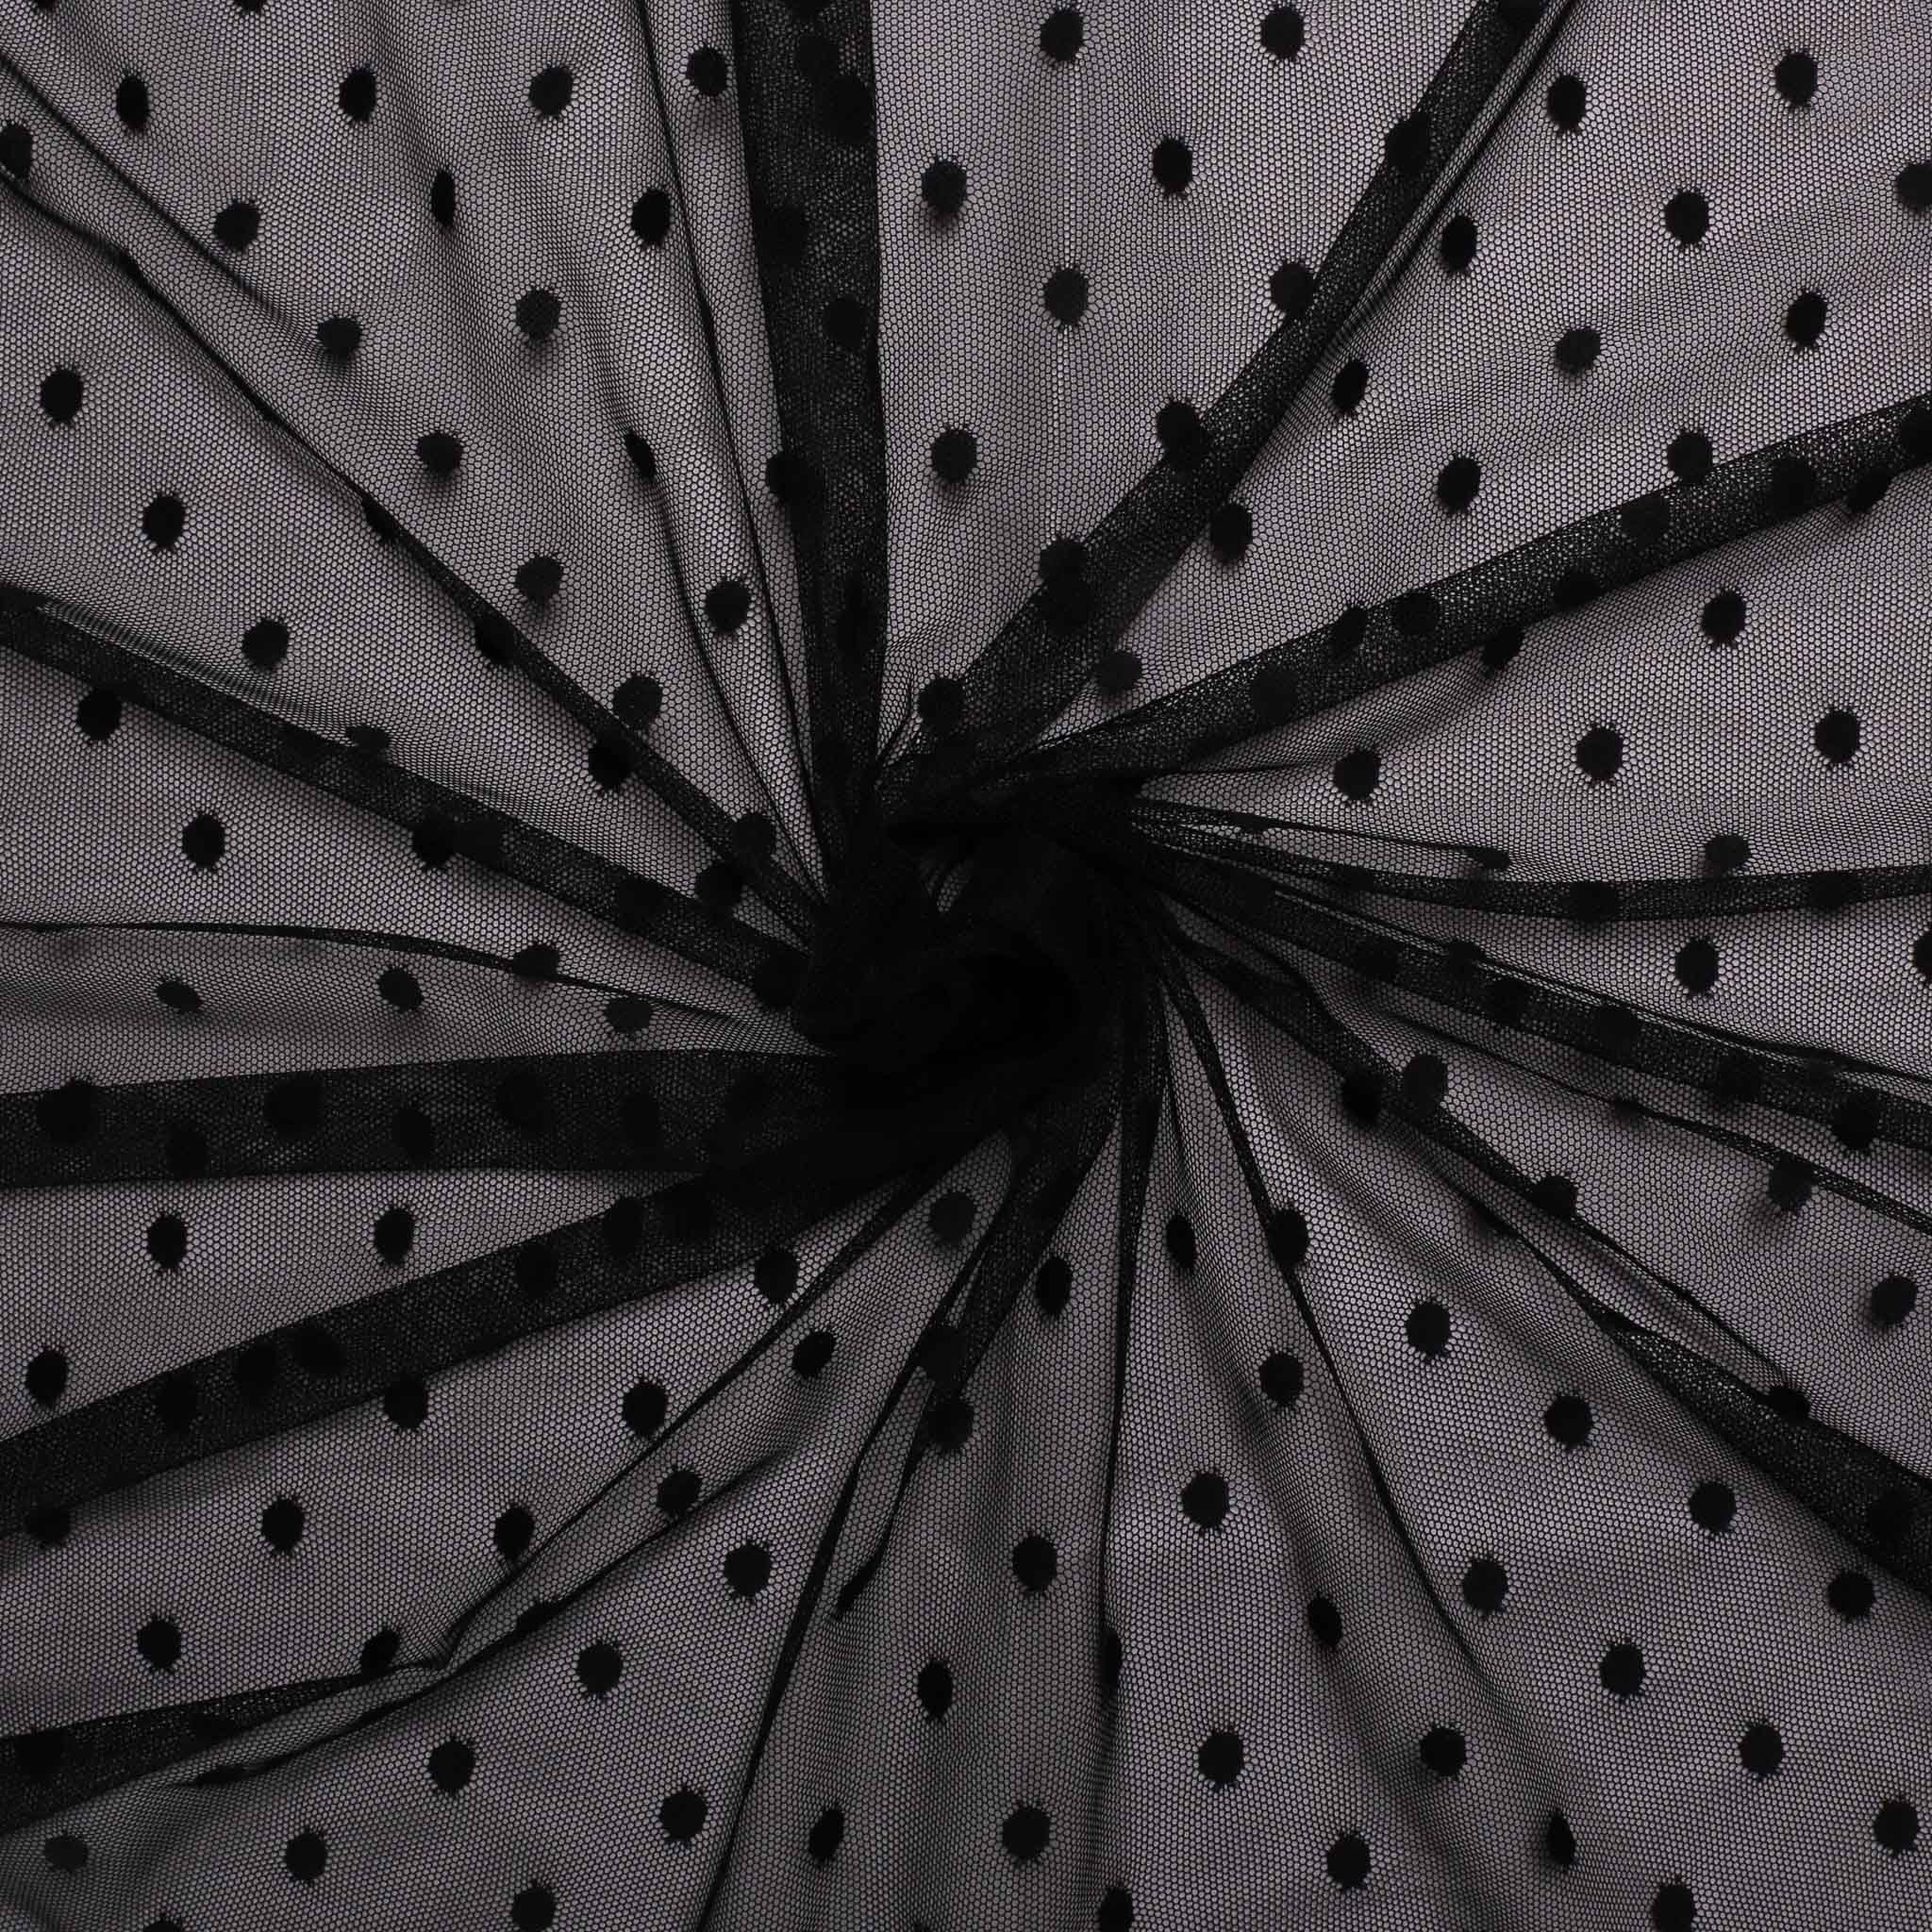 Stretchy Netting fabric, Black polka dot design